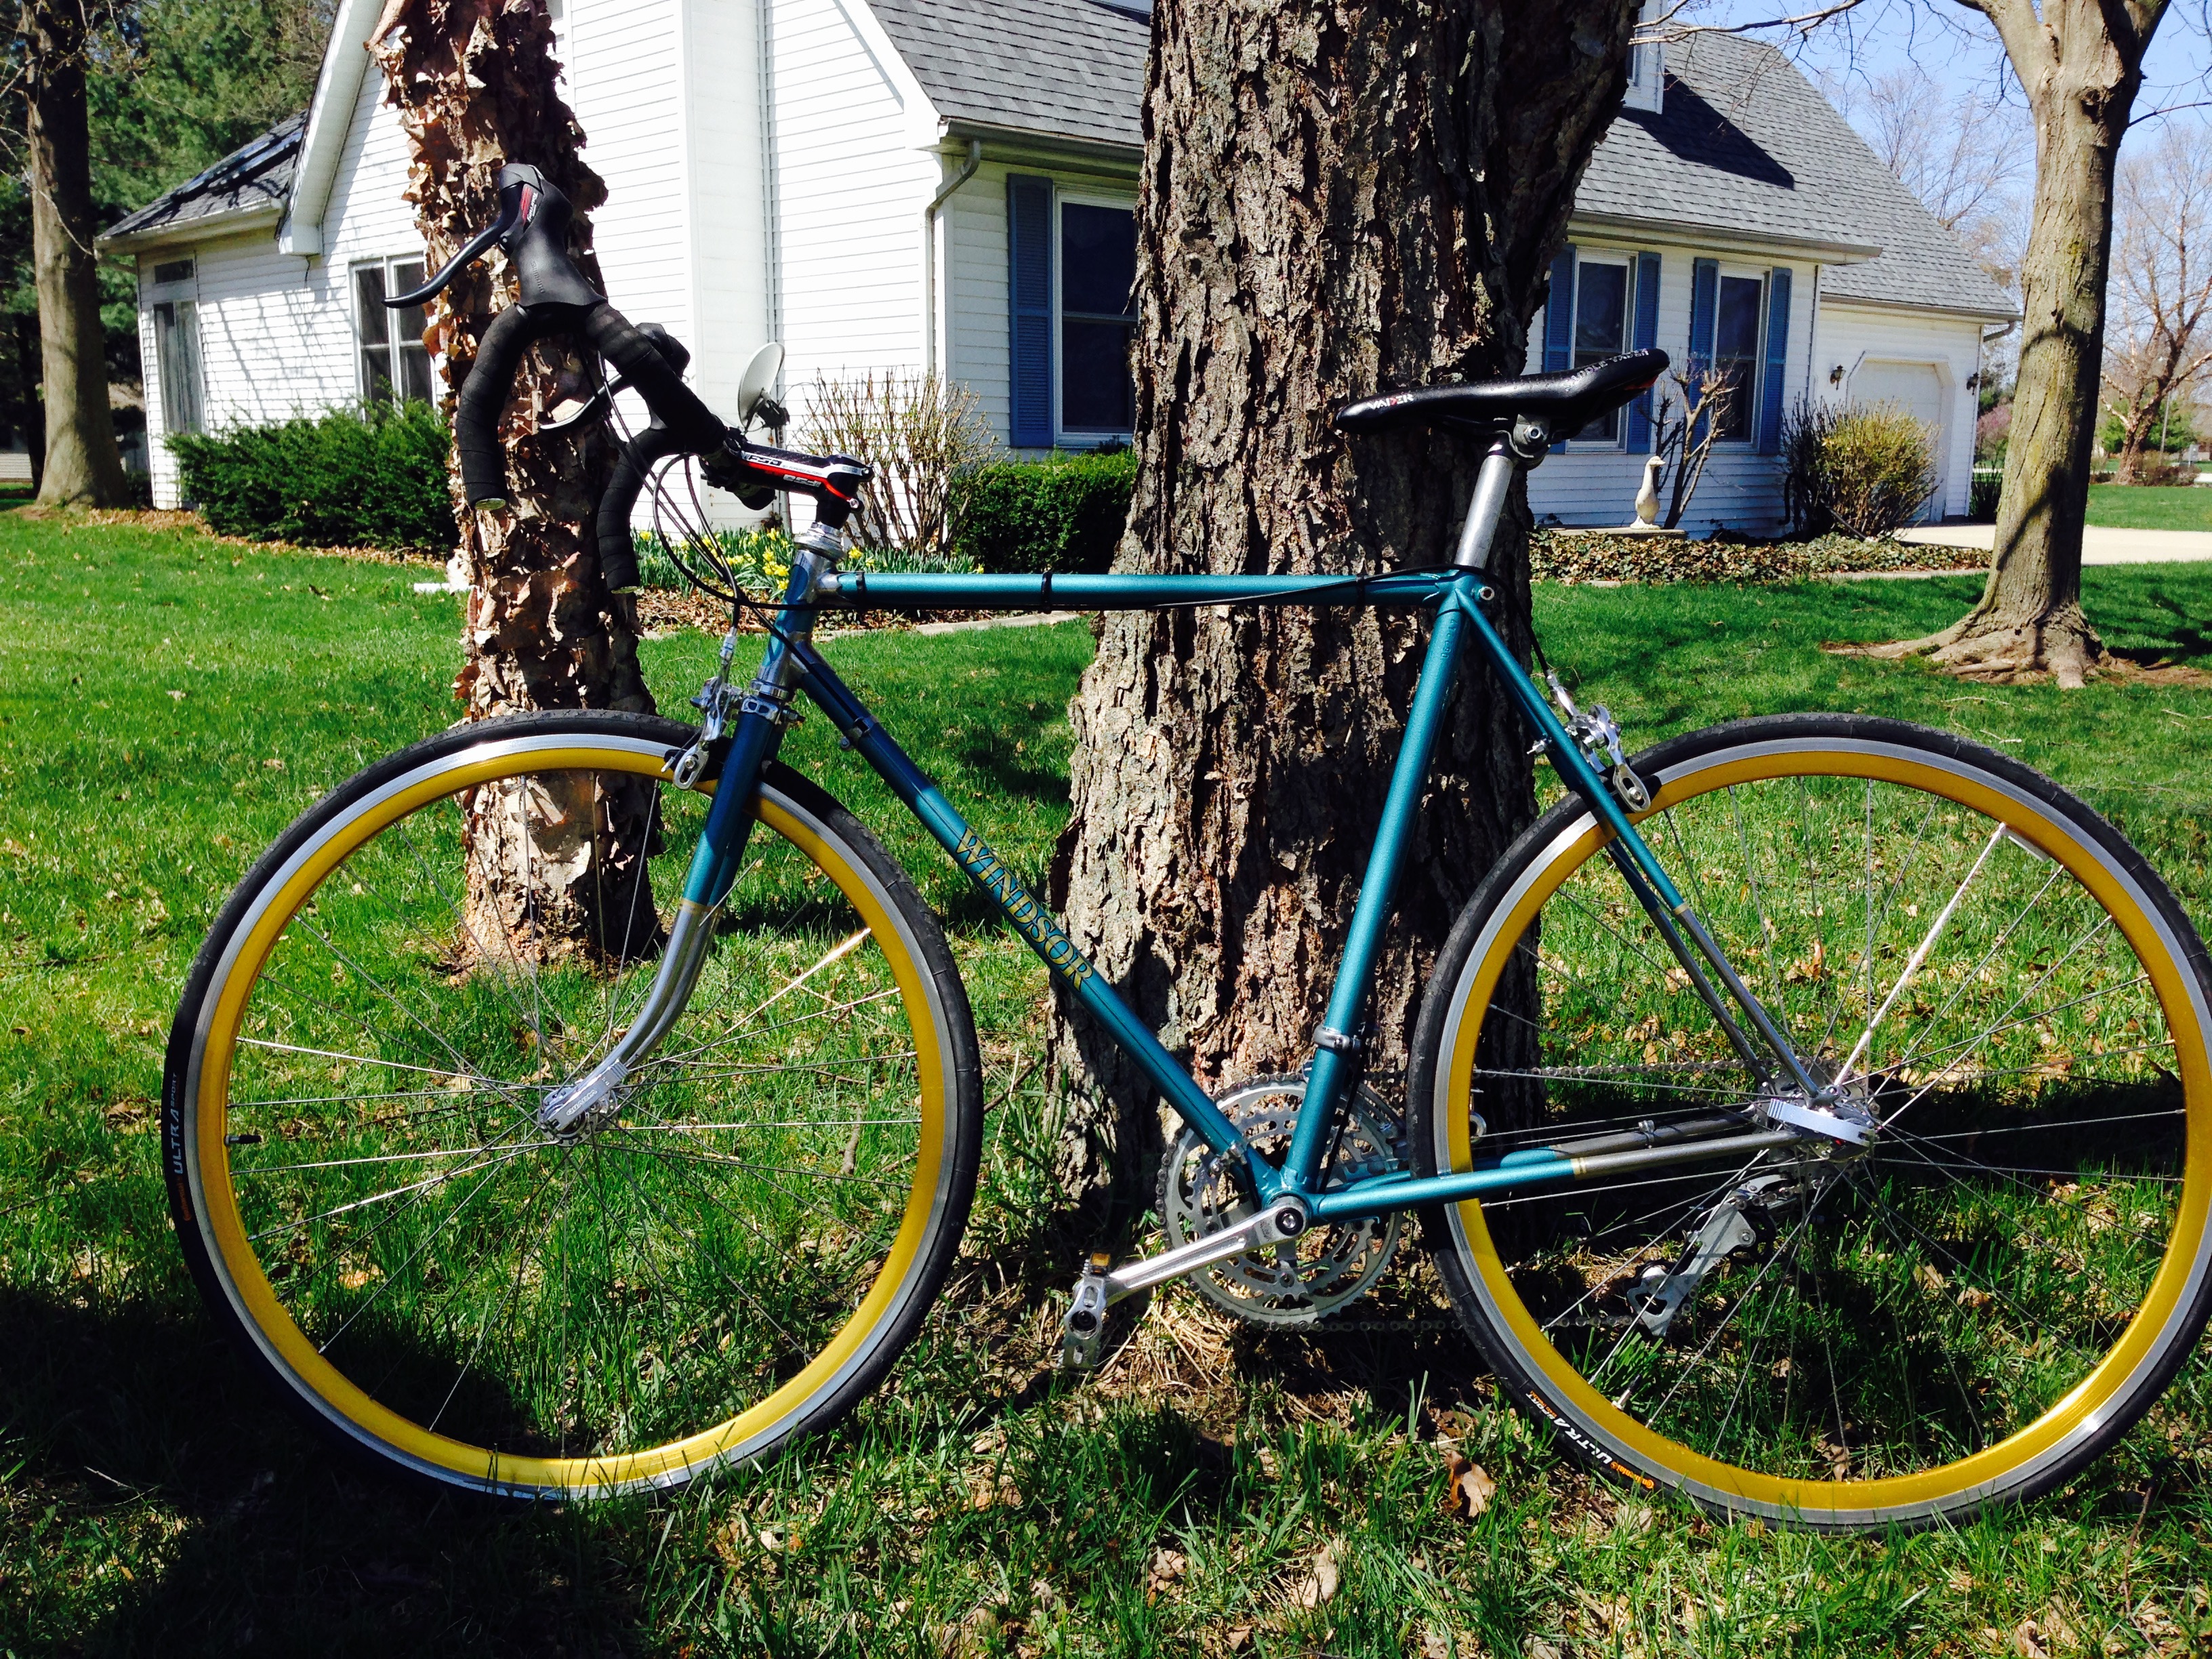 1978 Windsor Bike repainted and NEW DECAL